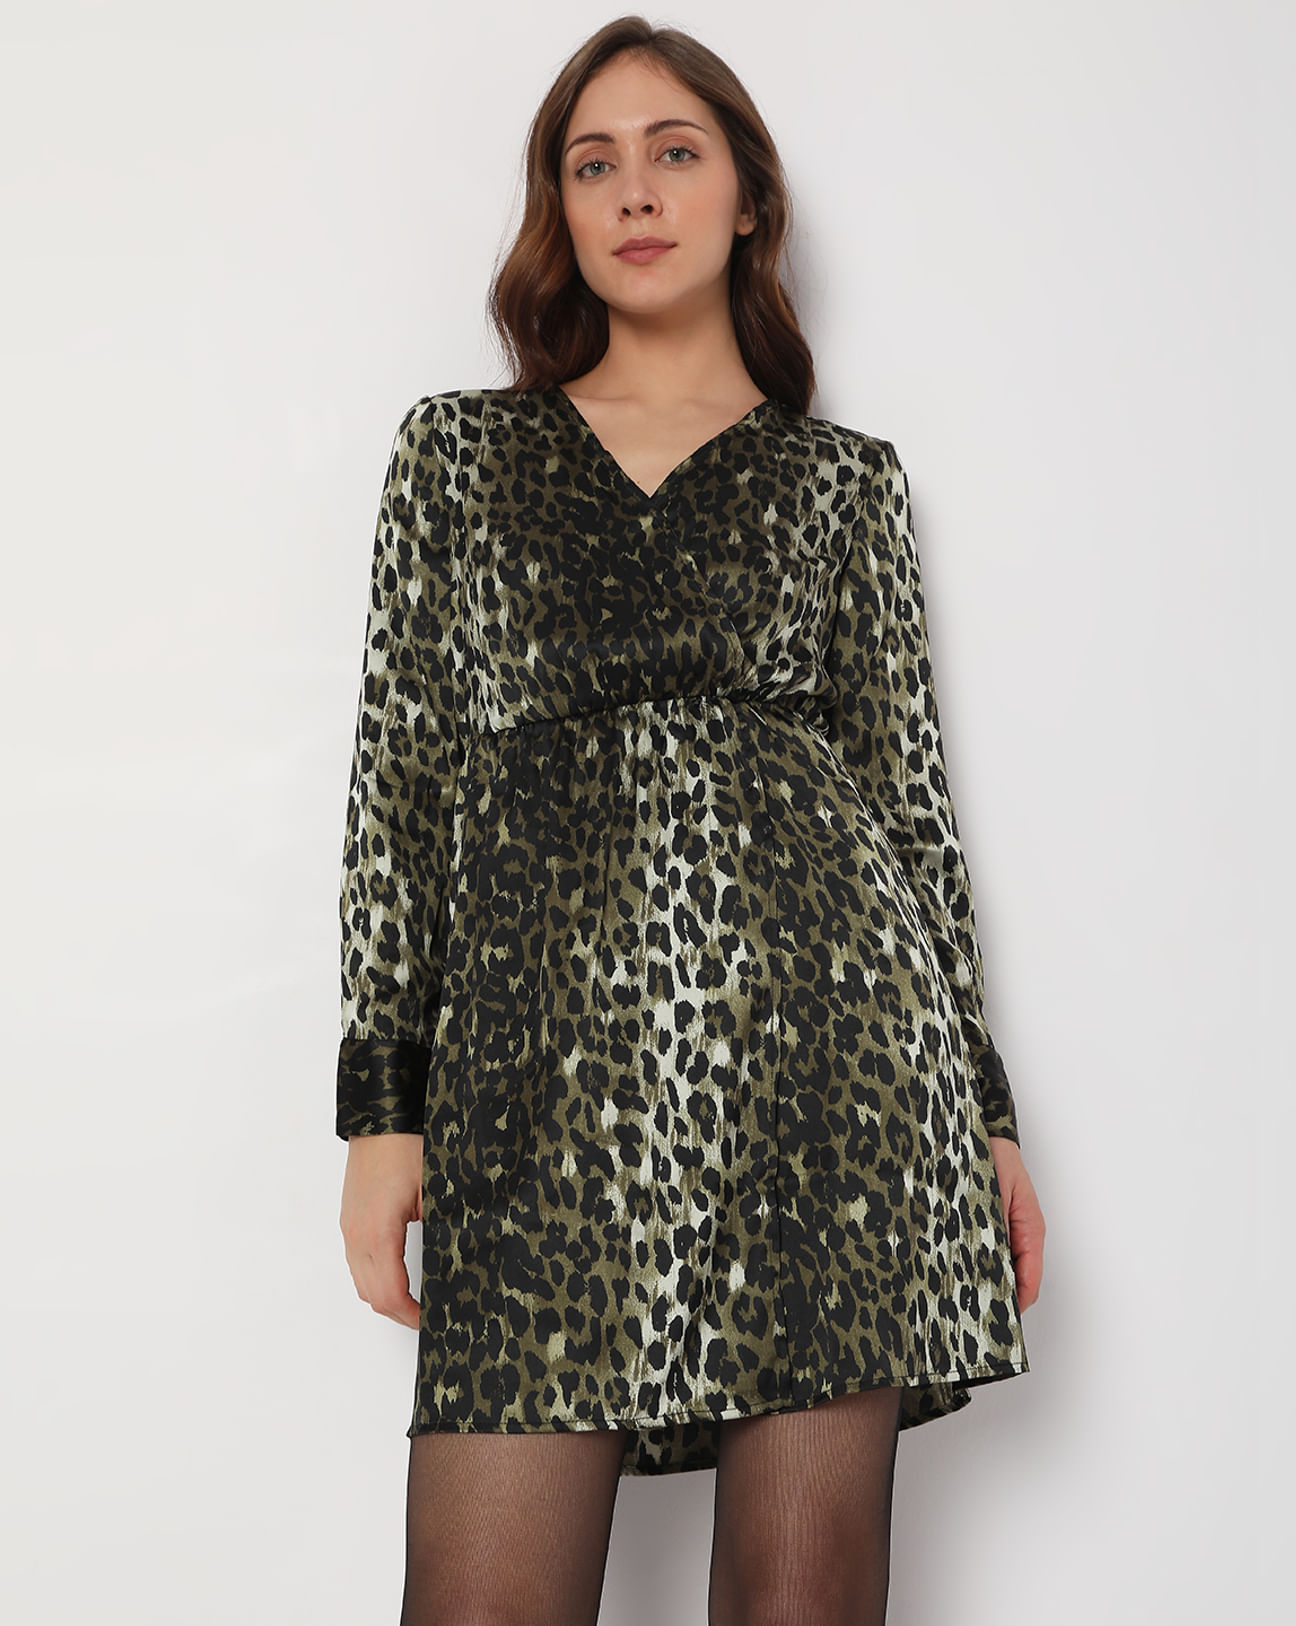 Buy Green Animal Print Wrap Dress For Women Online in India